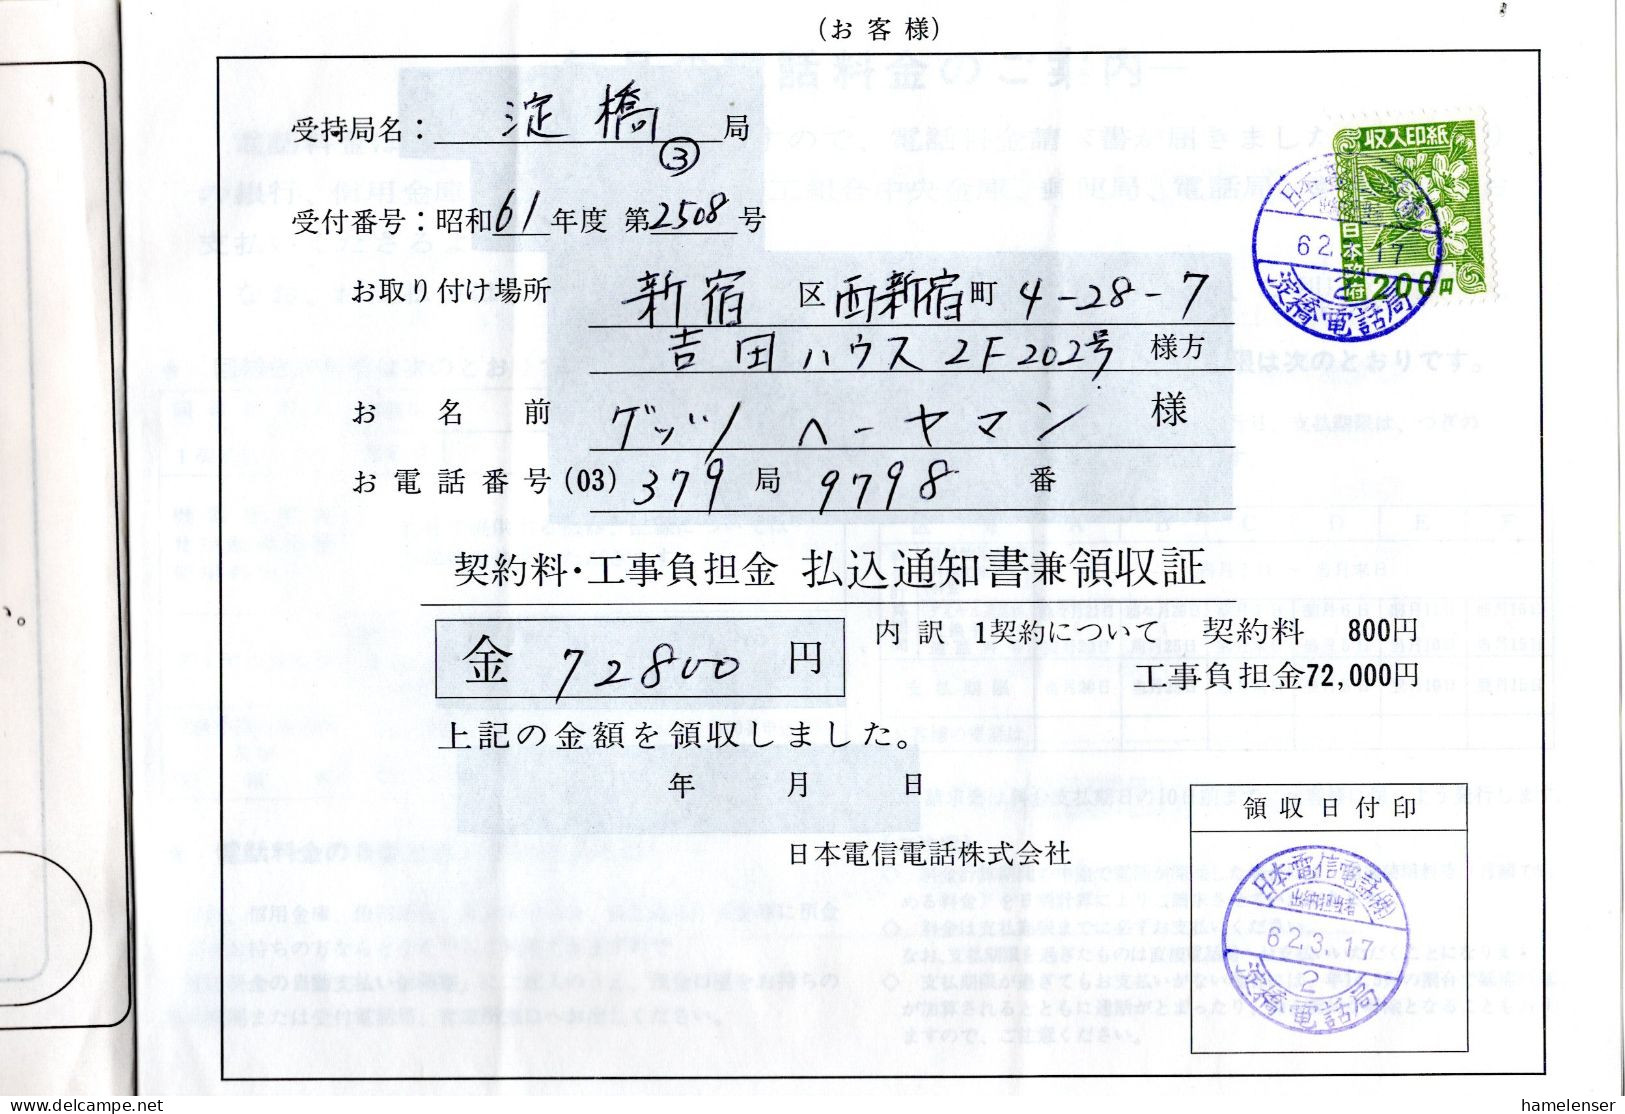 L65575 - Japan - 1987 - ¥200 Stempelmarke EF A Fernmeldevertragsgrundgebuehrquittung, NTT-Filiale Yodobashi, Tokyo - Gebührenstempel, Impoststempel